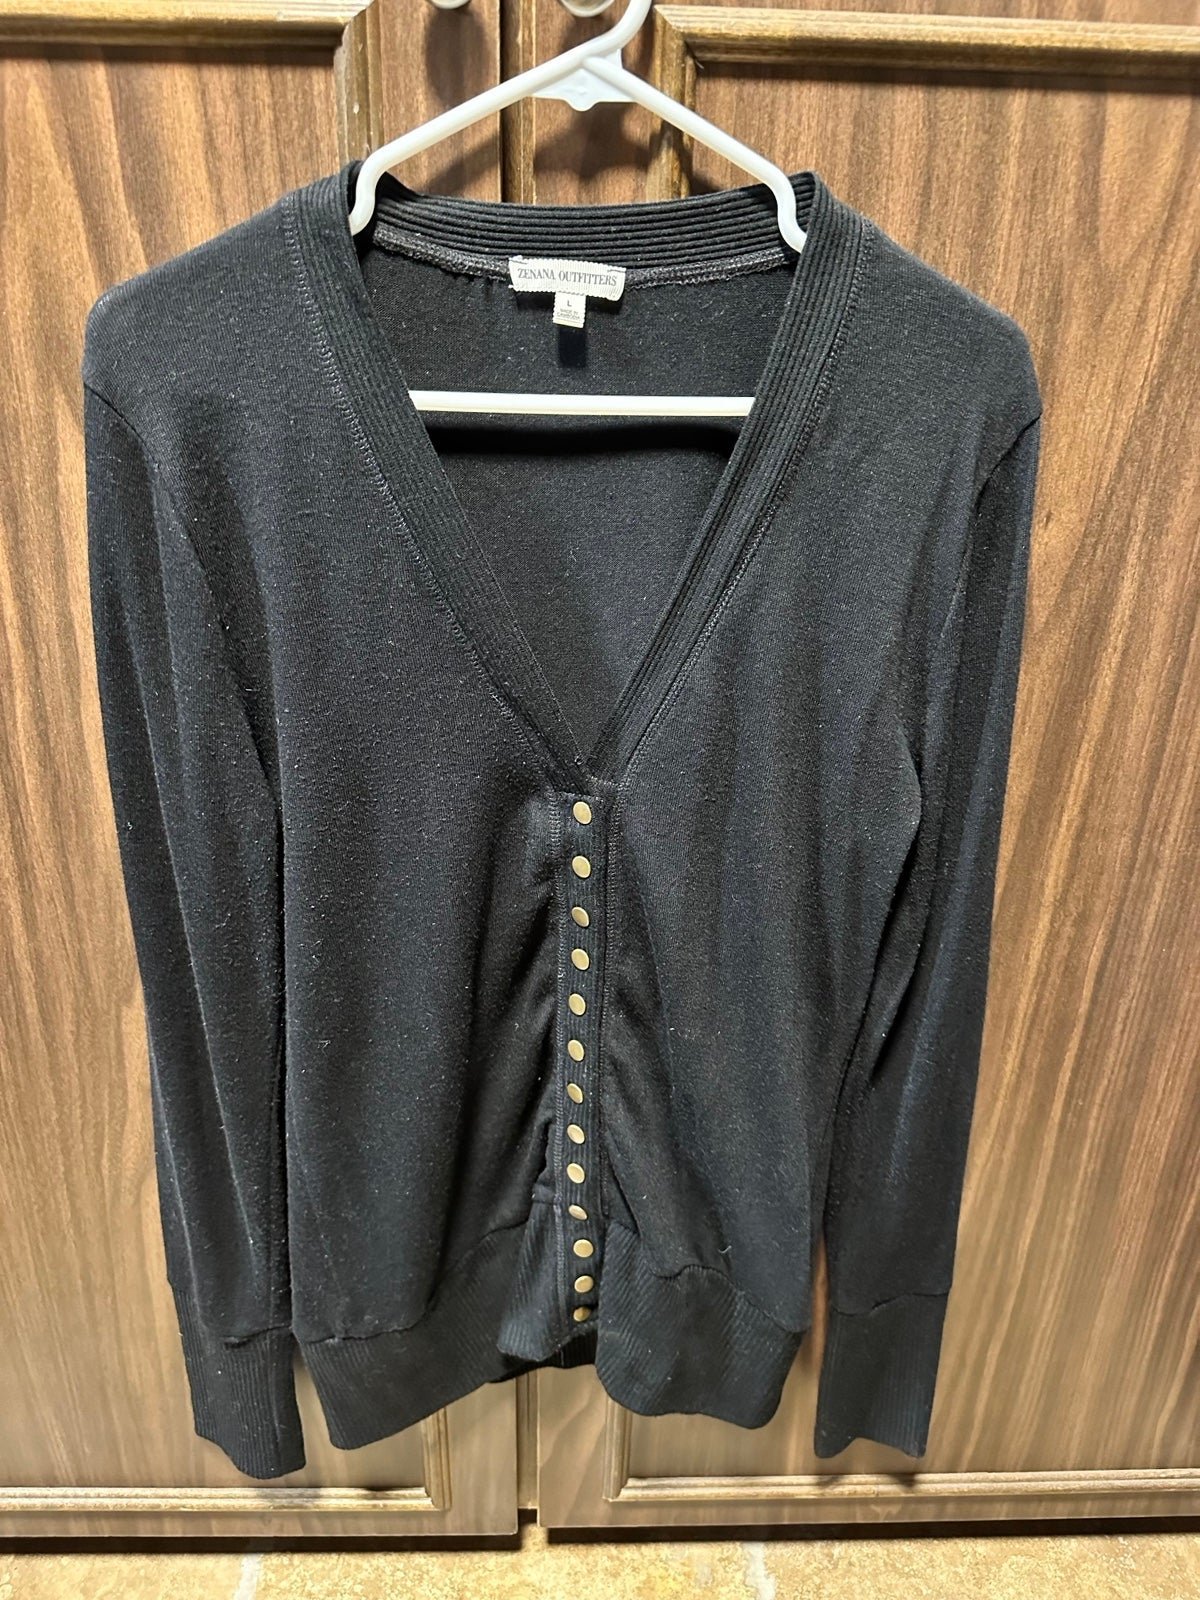 reasonable price Zenana Outfitters Sweater Size Large m